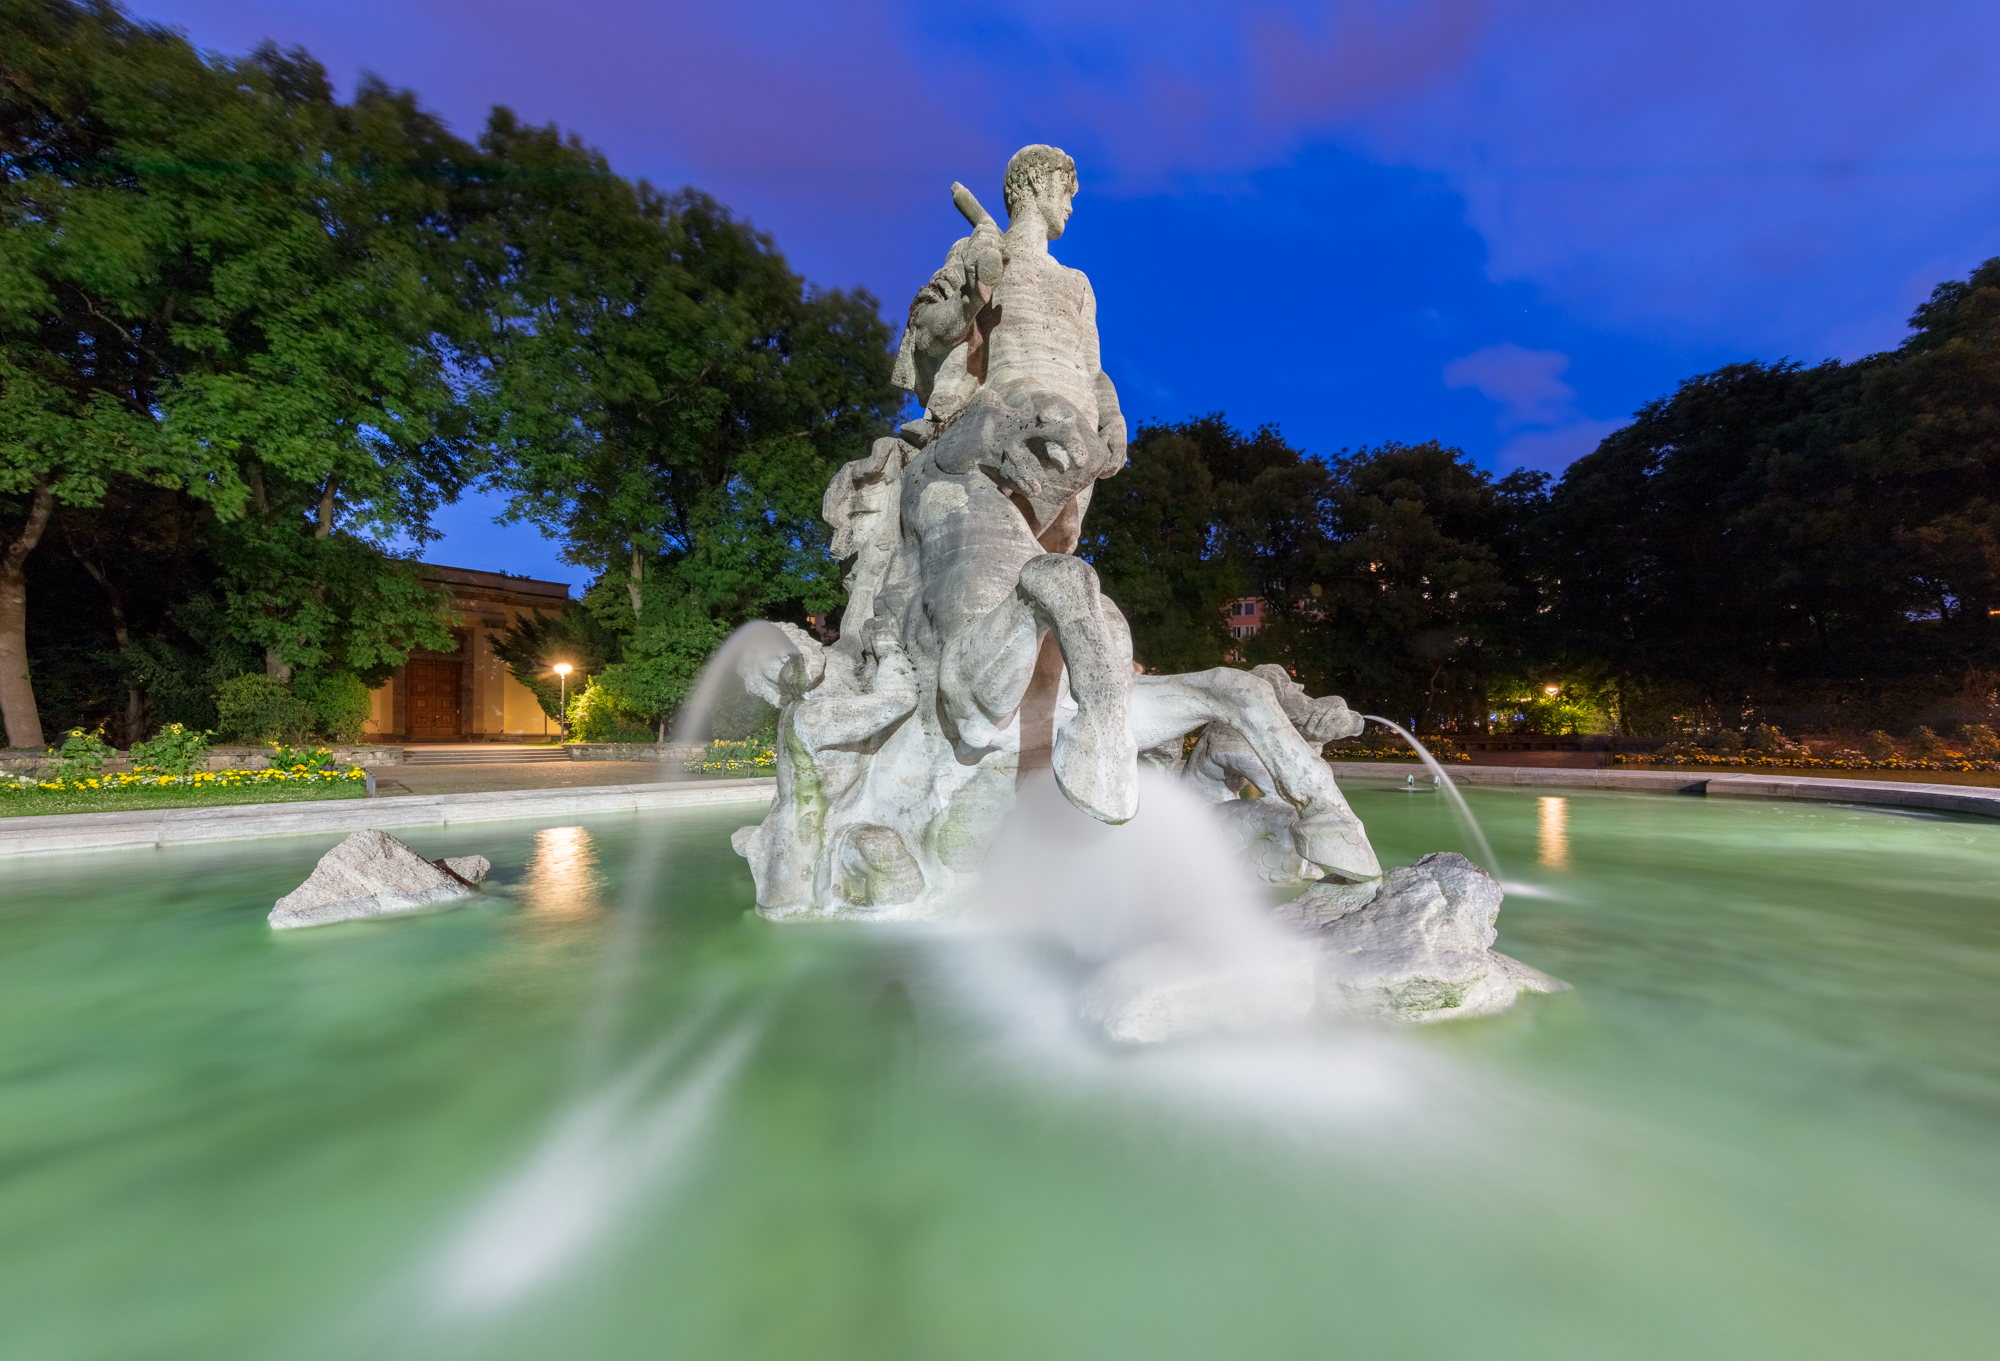 Neptune Fountain, Old Botanic Garden, Munich, Germany